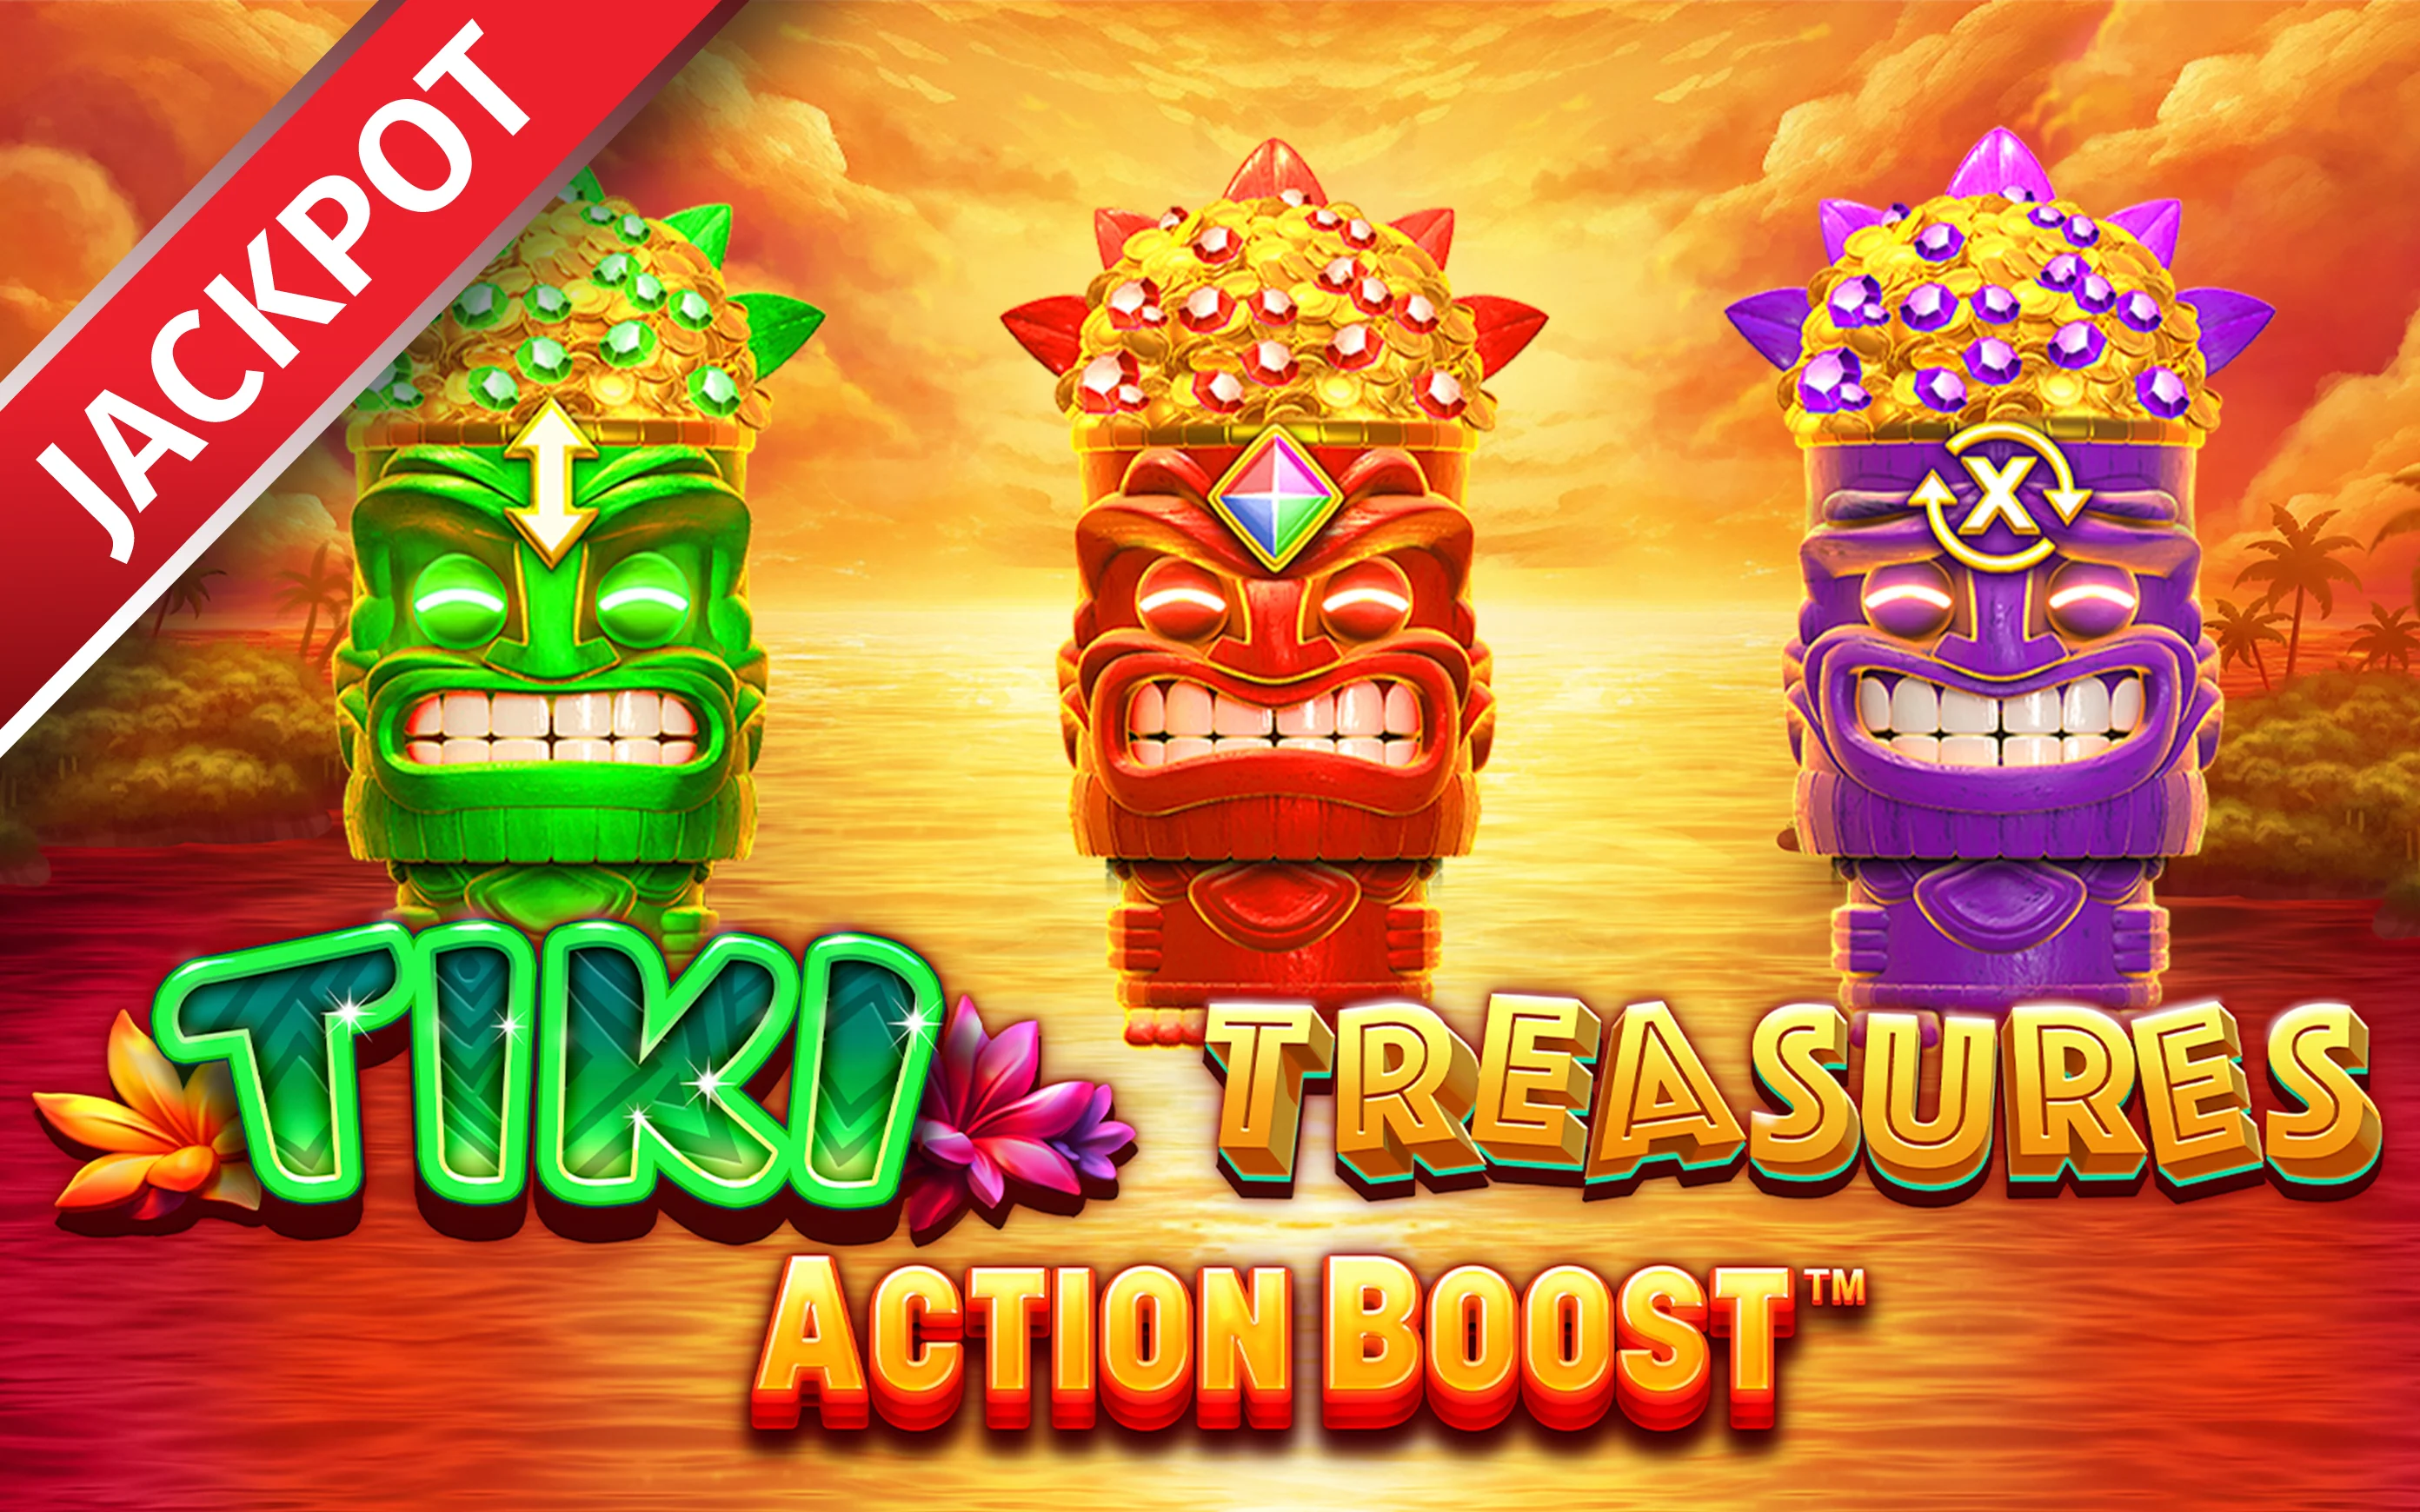 Play Action Boost™ Tiki Treasures on Starcasino.be online casino